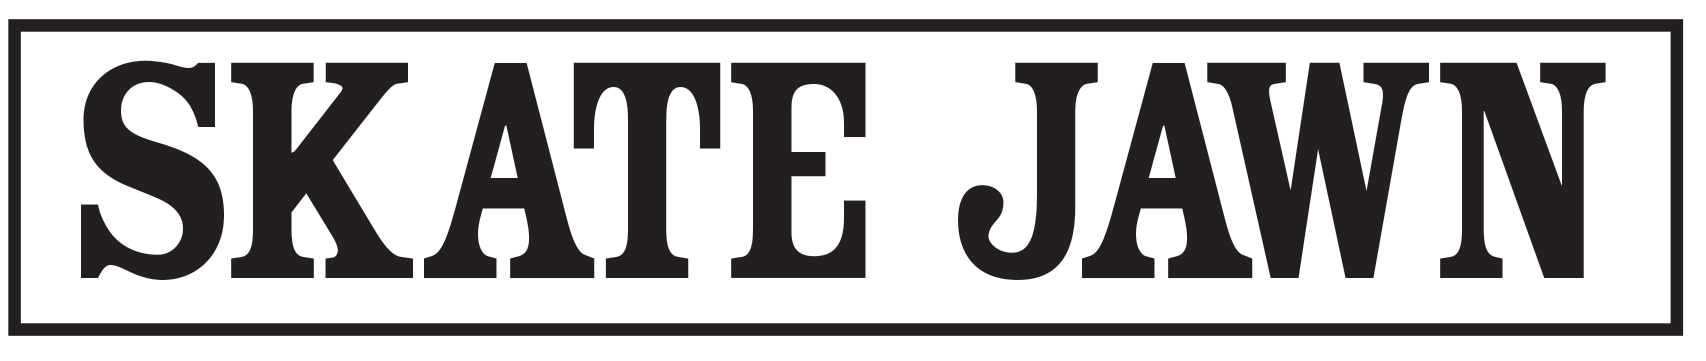 skate-jawn-magazine-logo-header.png